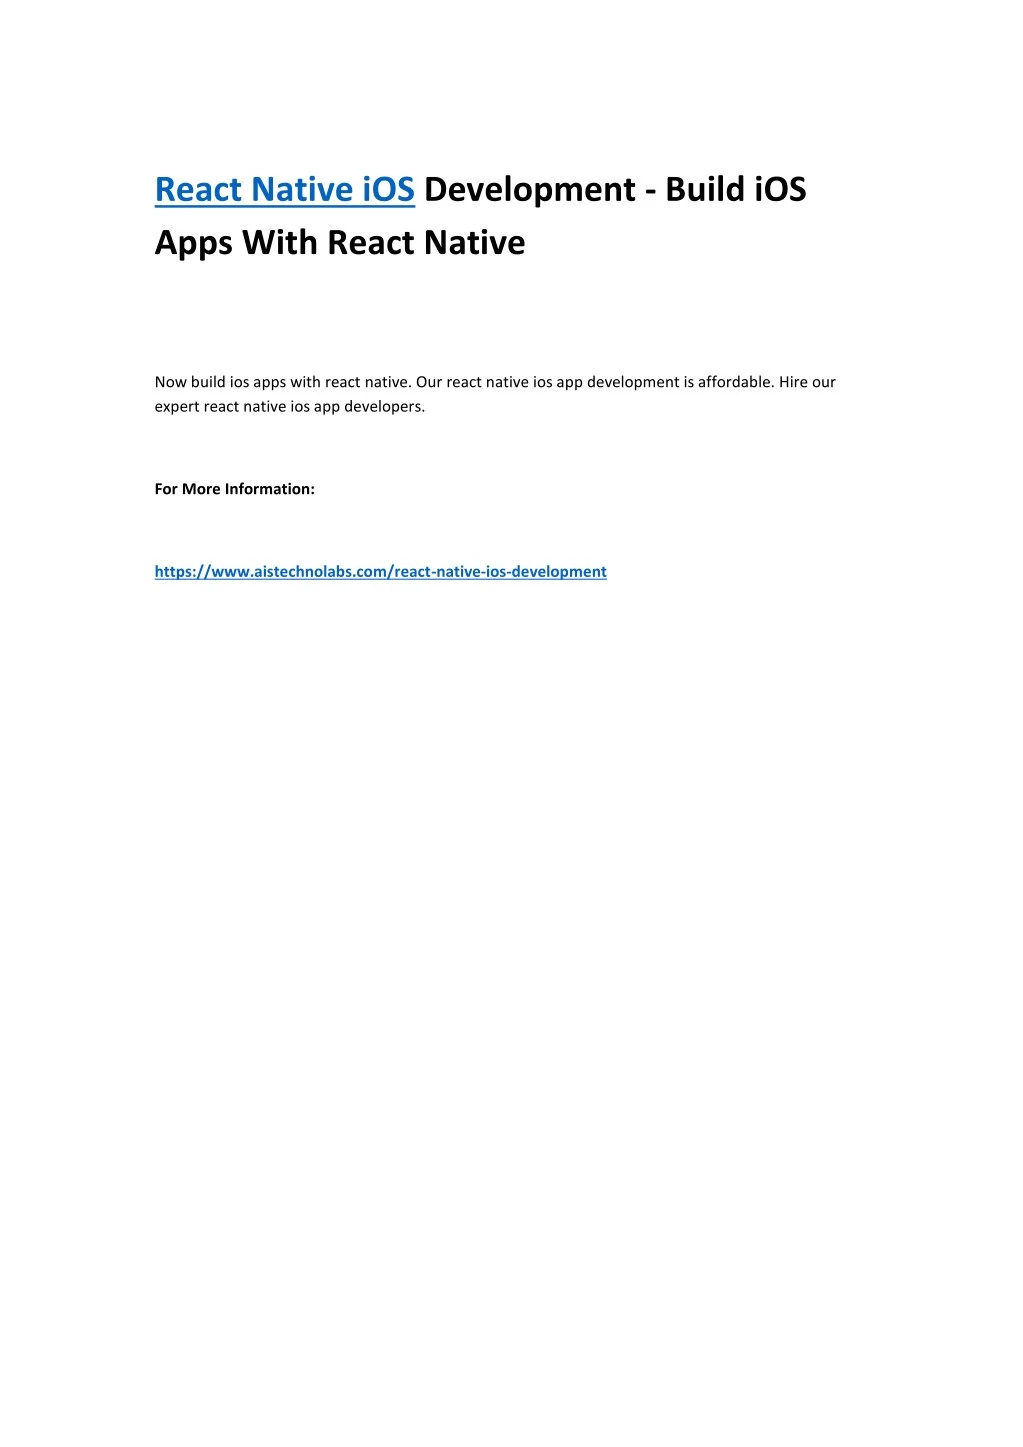 react native ios development build ios apps with